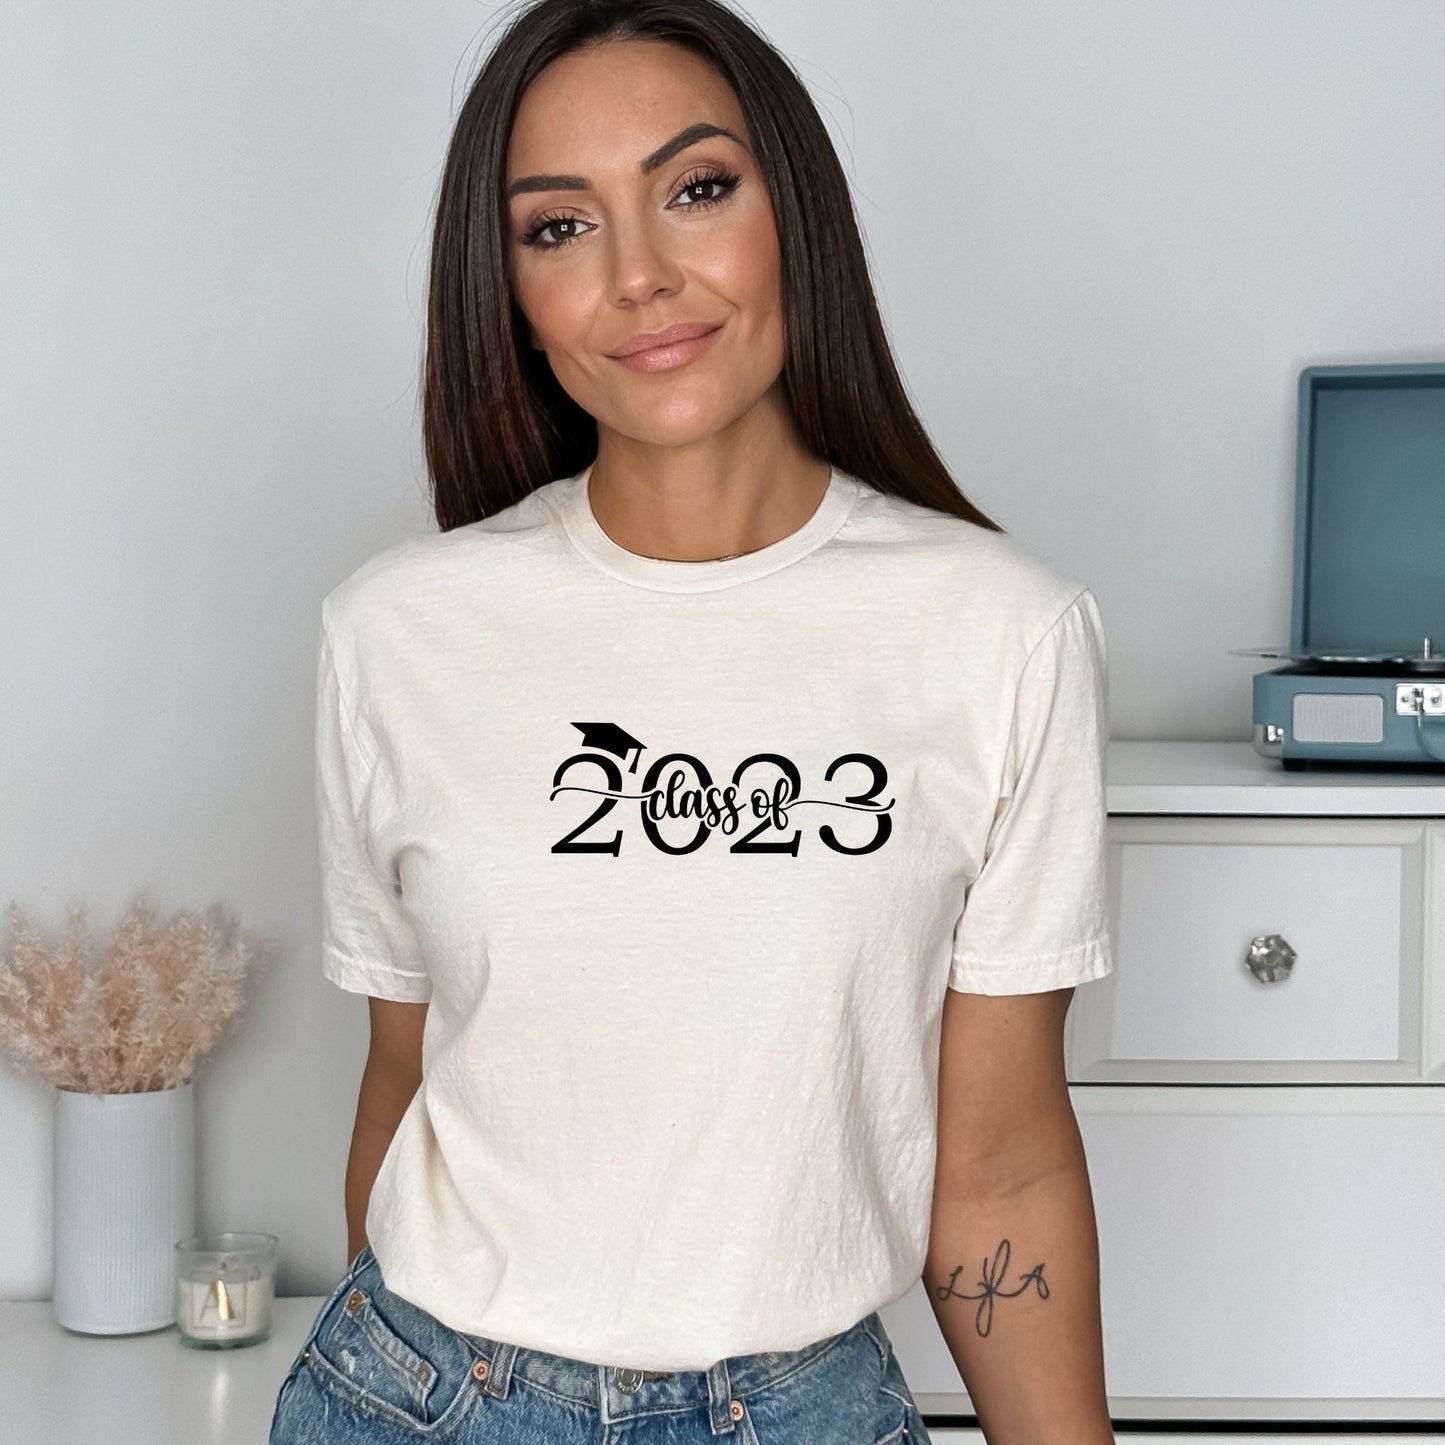 Class of 2023 Graduation Tee - Adult Unisex Soft T-shirt